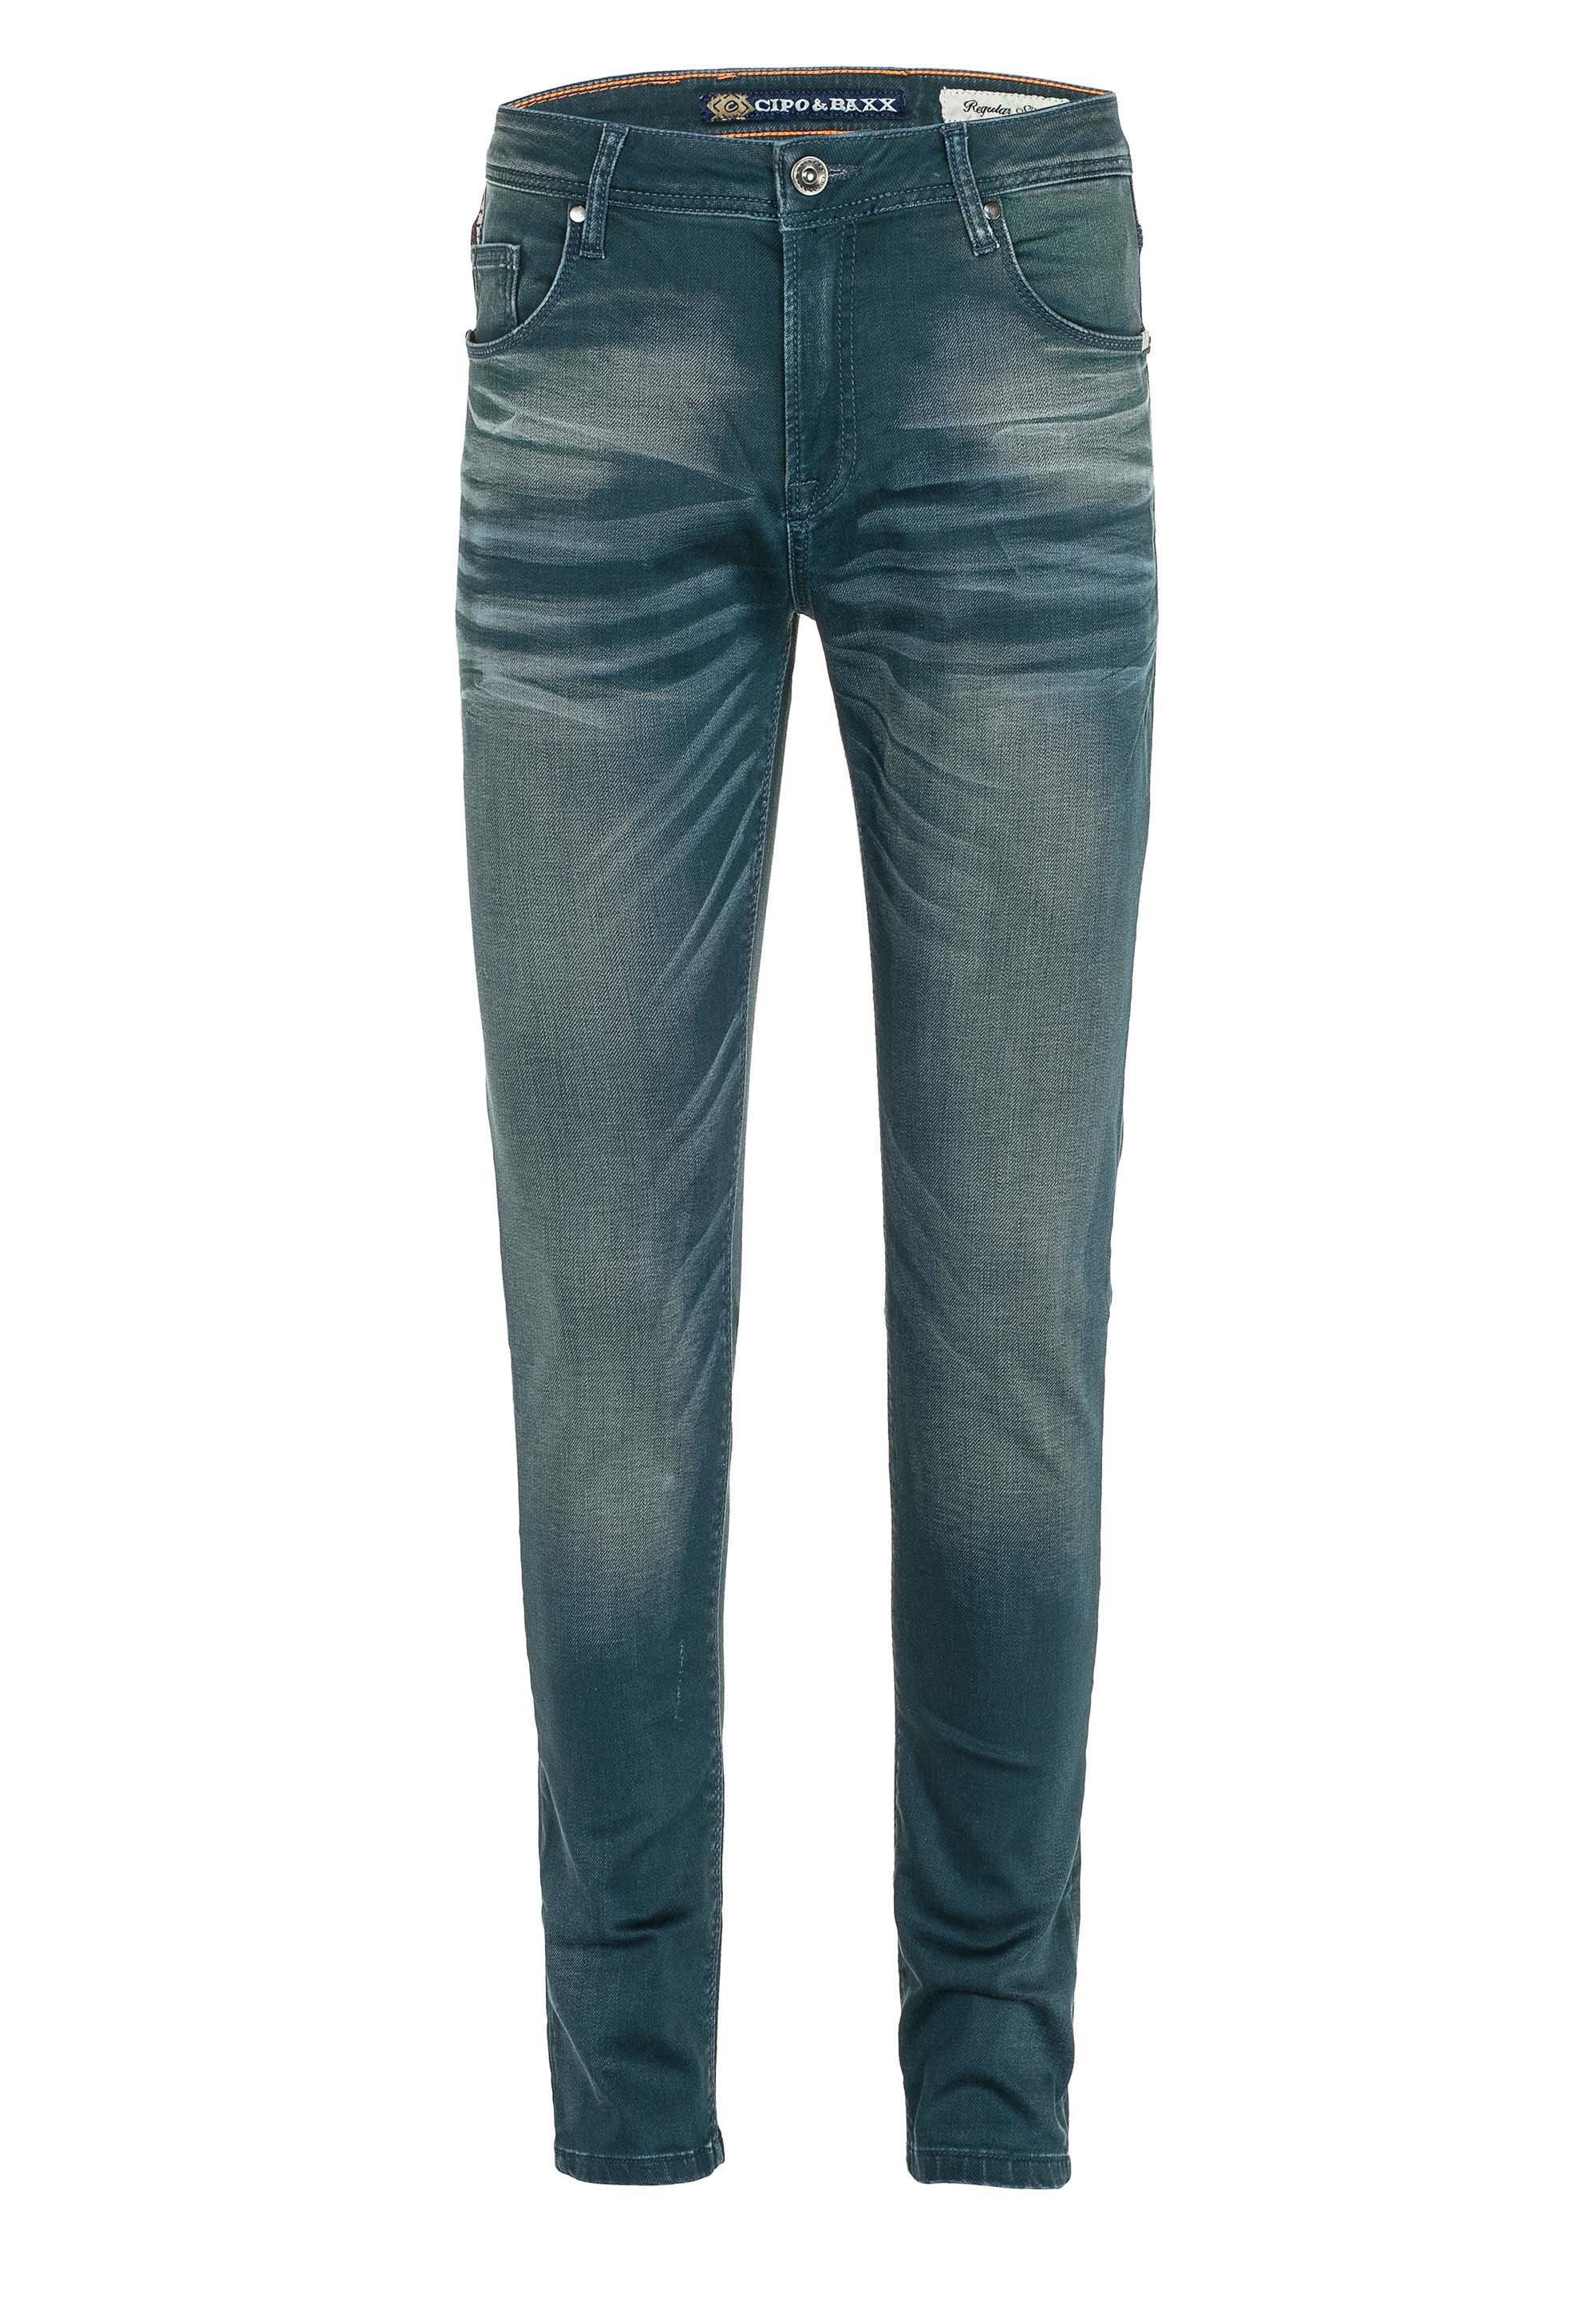 5-Pocket Straight im Fit Style blau in Baxx Slim-fit-Jeans & Cipo